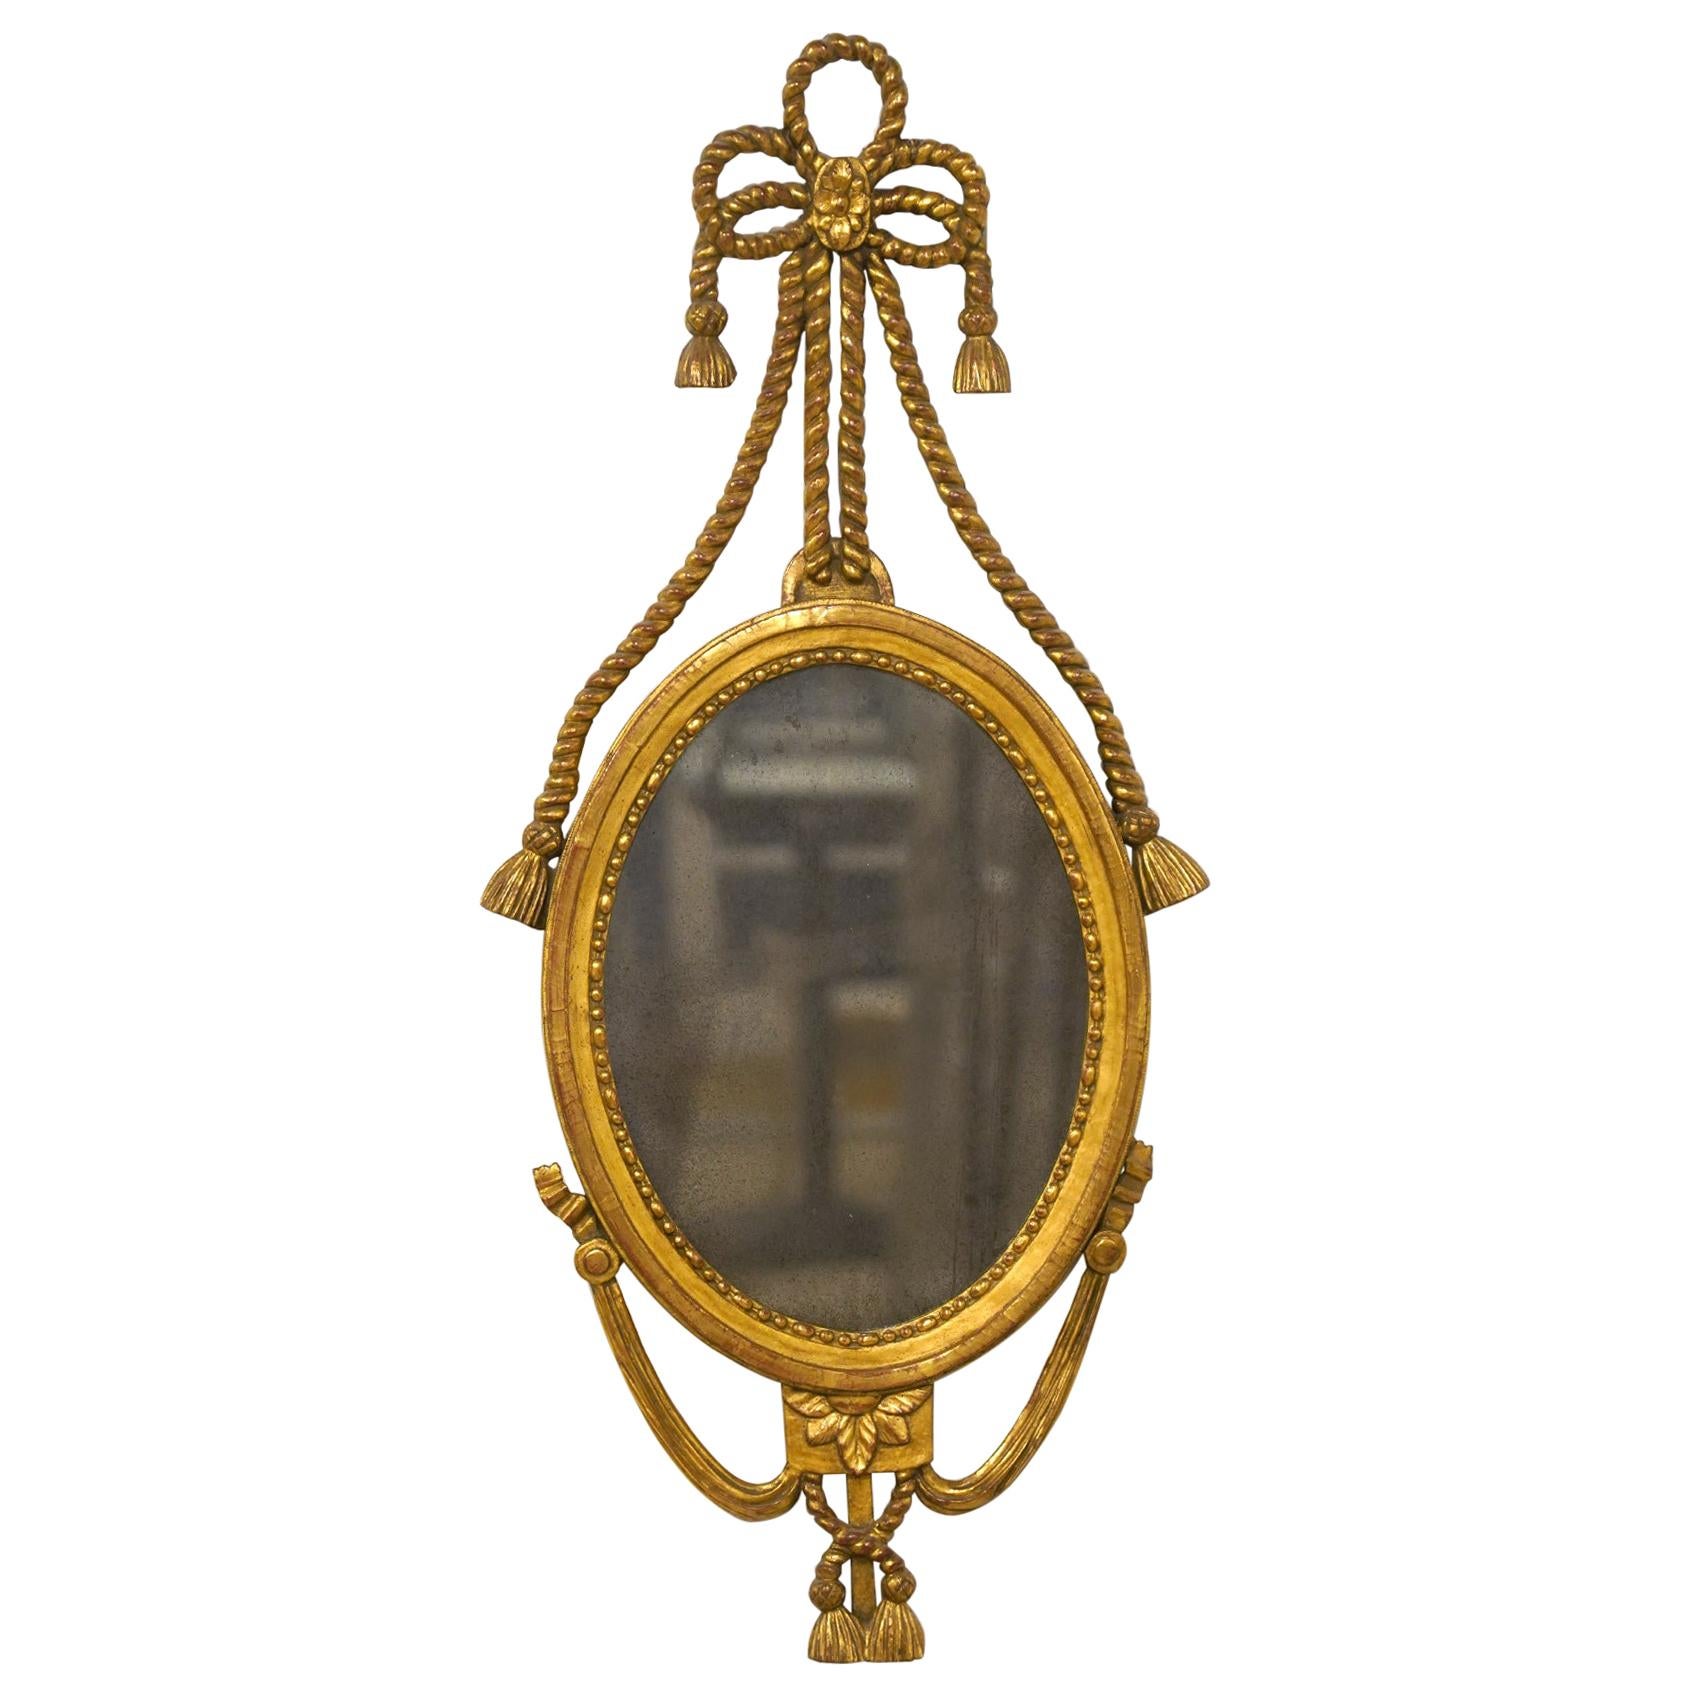 English Georgie III Oval Carved Rope and Tassel Giltwood Mirror, circa 1830